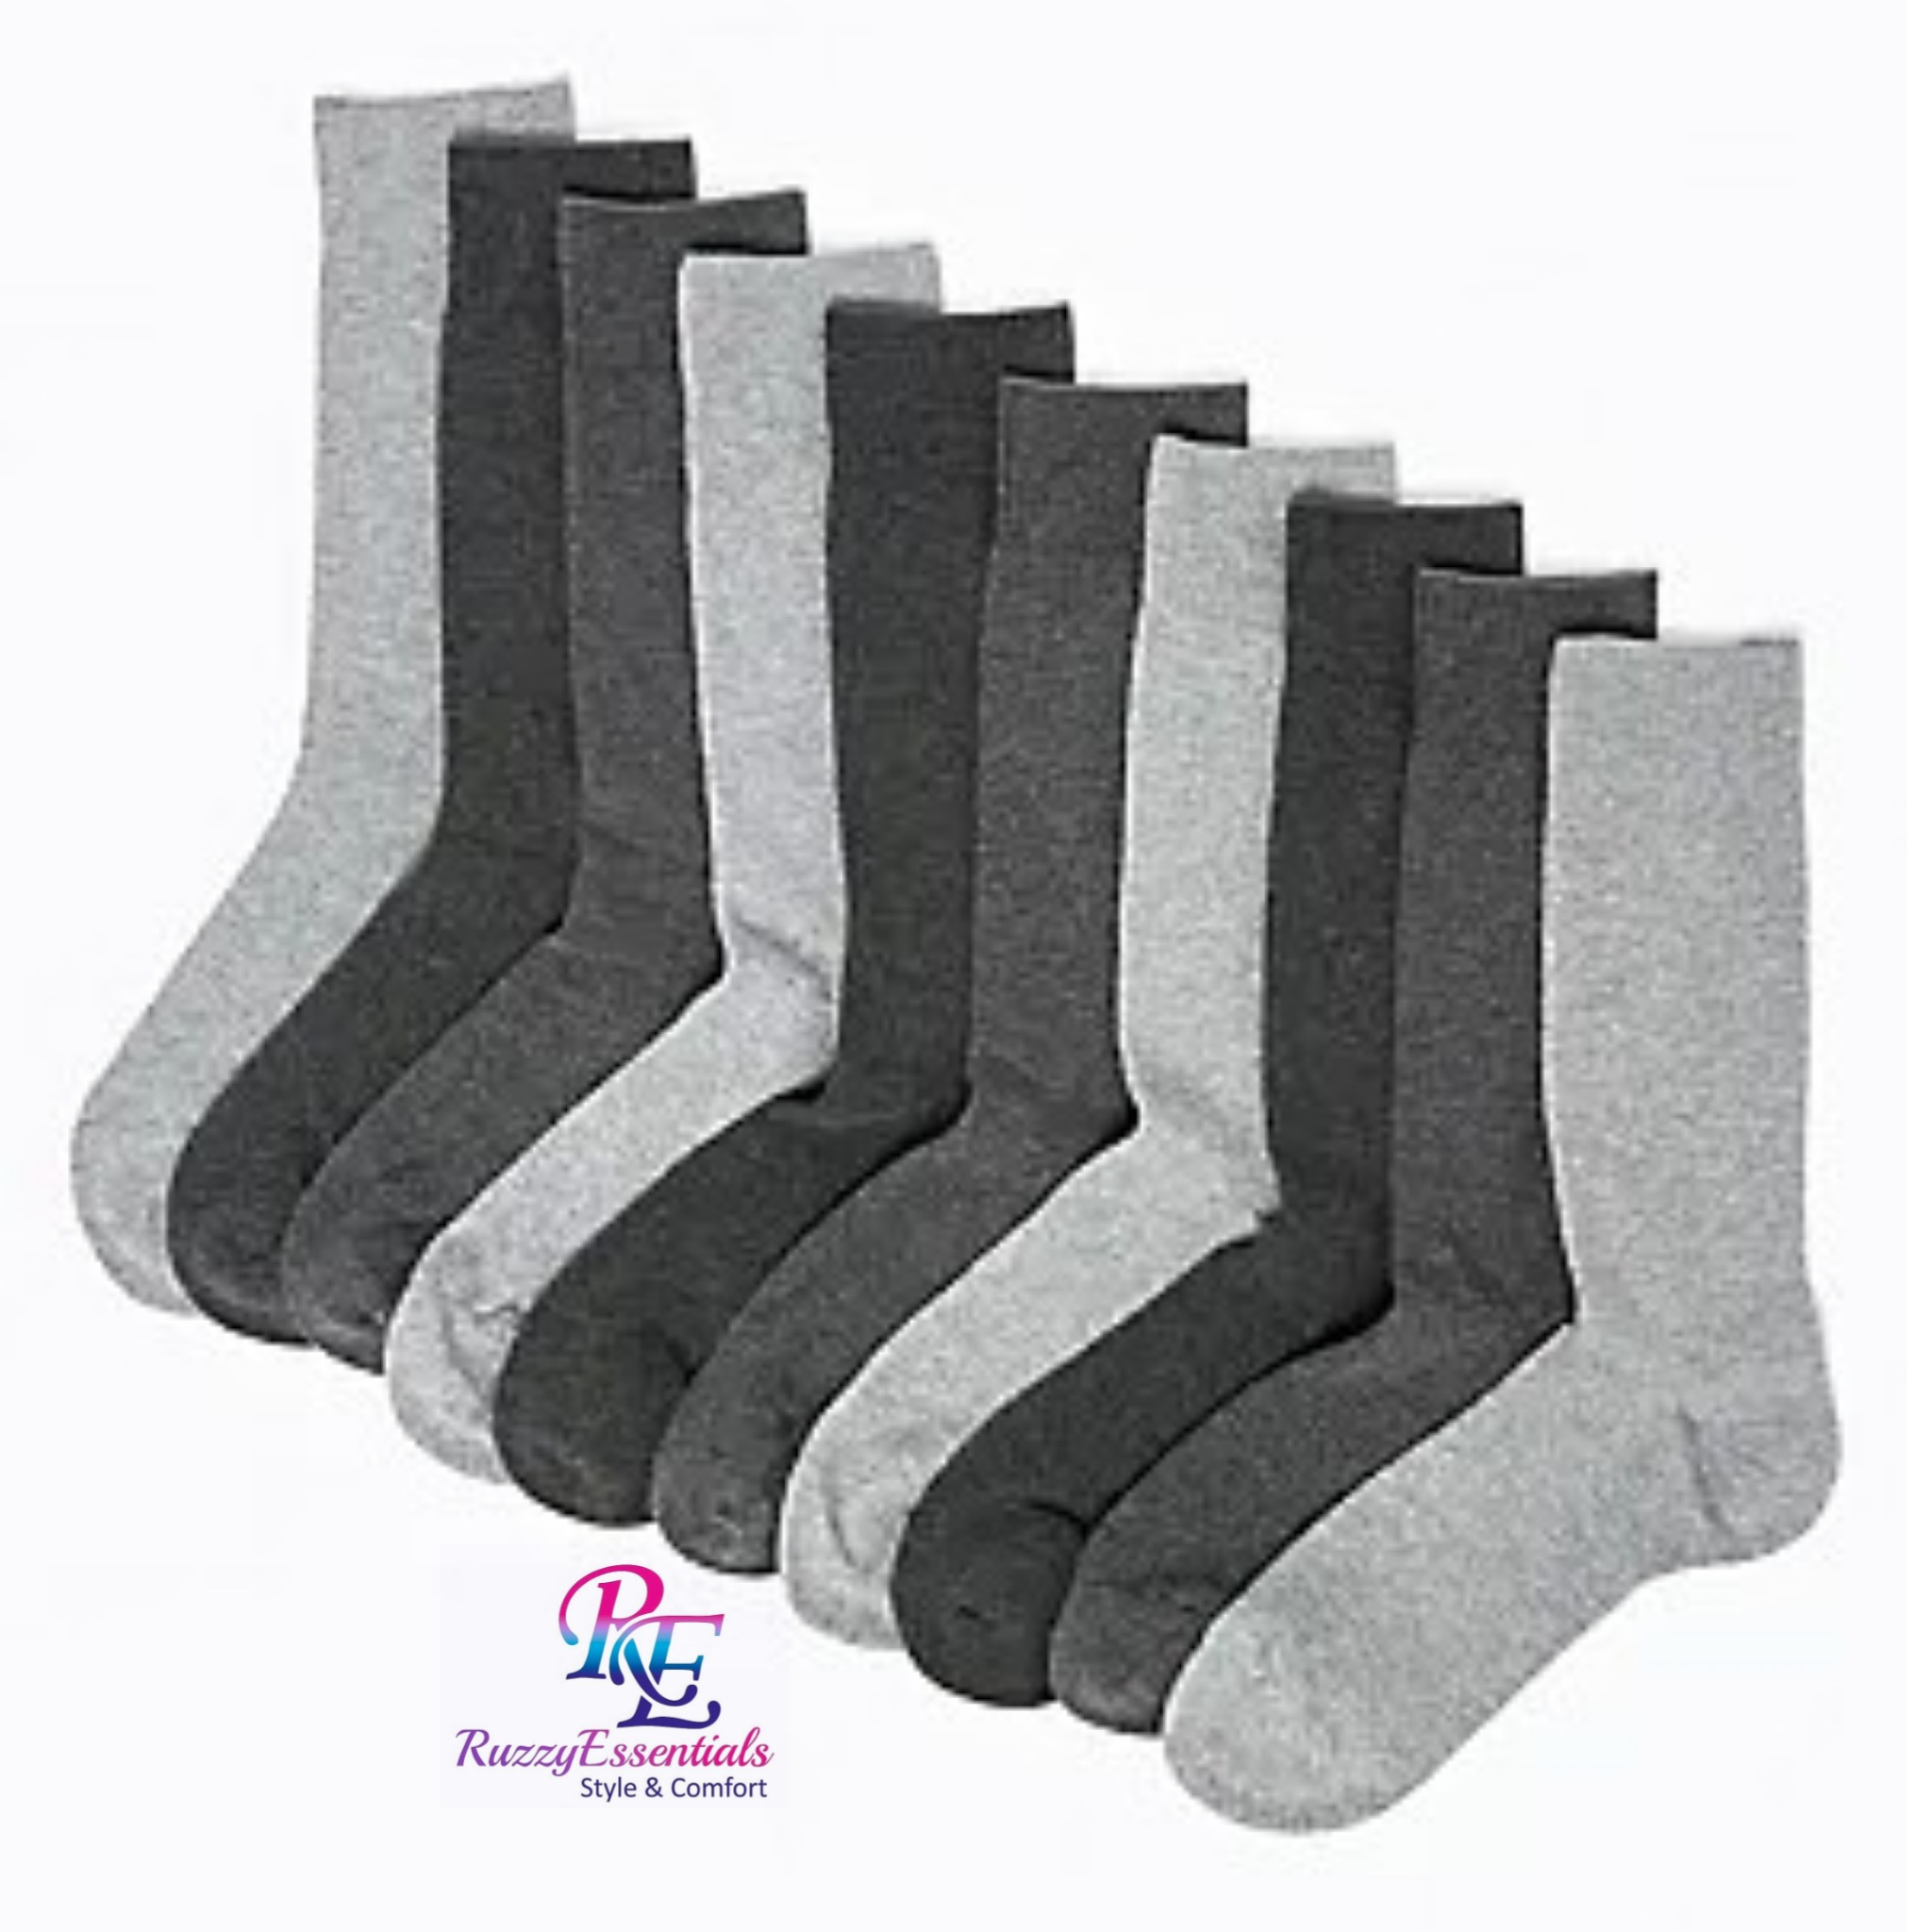 ECODIM Pack of 5 Pairs of Women's Light Grey Cotton Mixed Socks